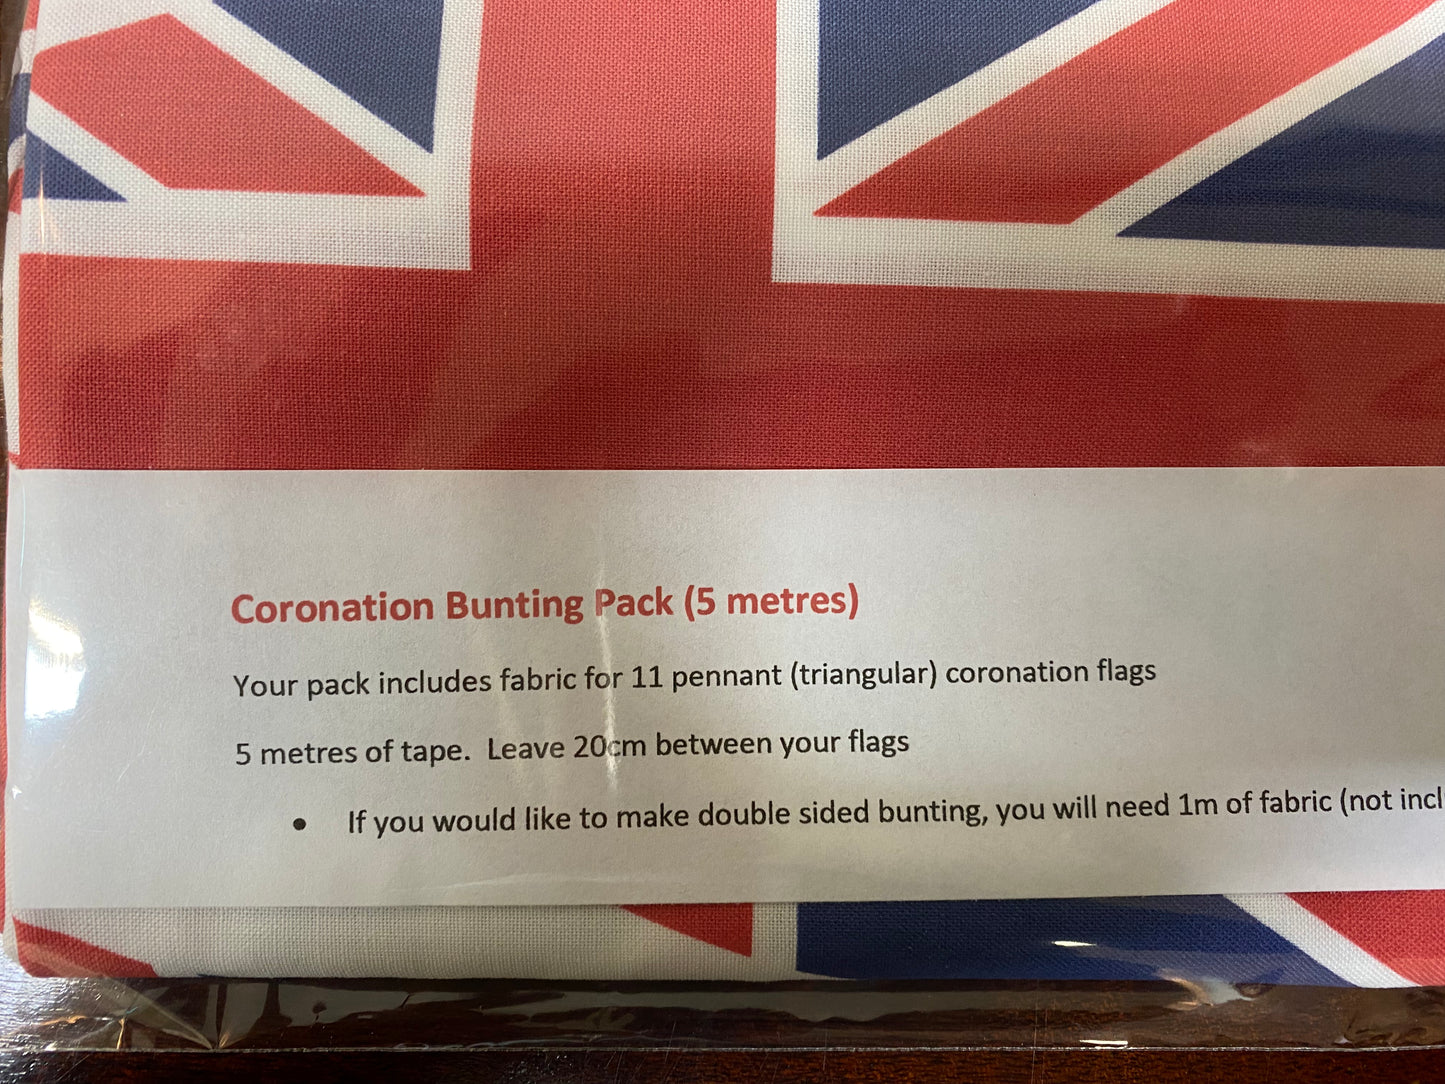 Union Jack DIY Bunting Pack - 5 metres - Make Your Own Bunting Kit!